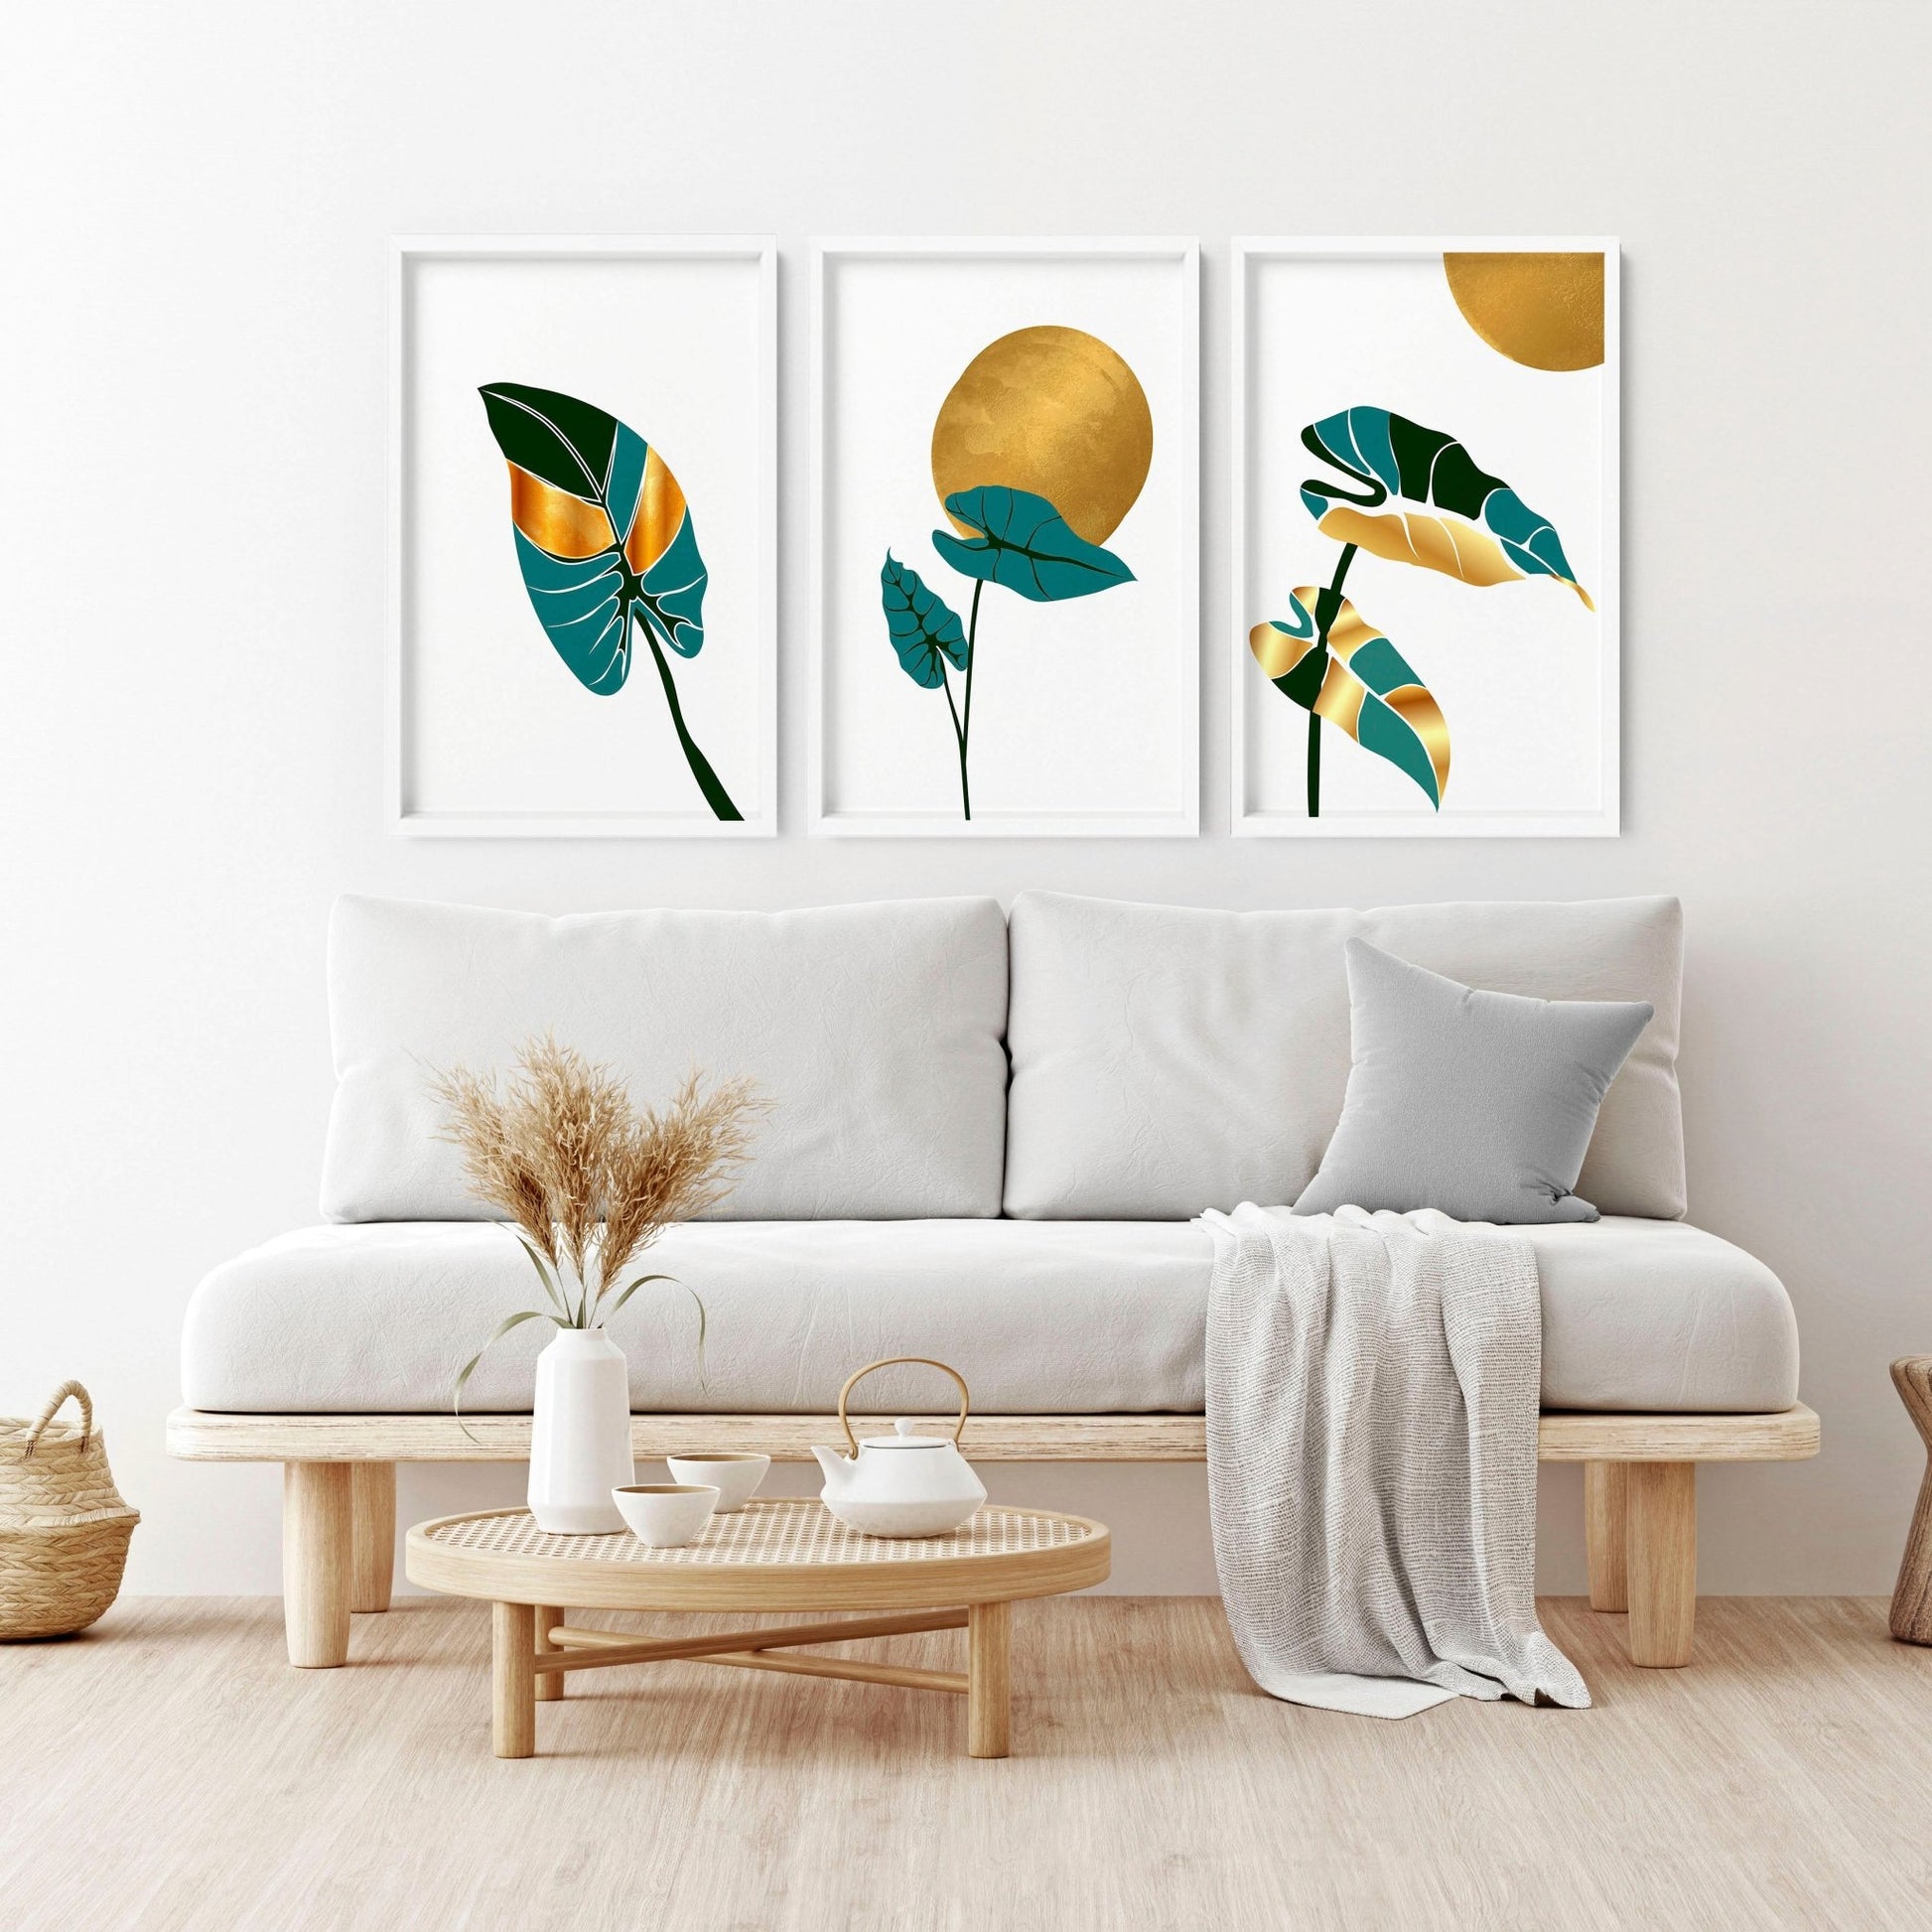 Botanical bohemian decor living room | set of 3 wall art prints - About Wall Art